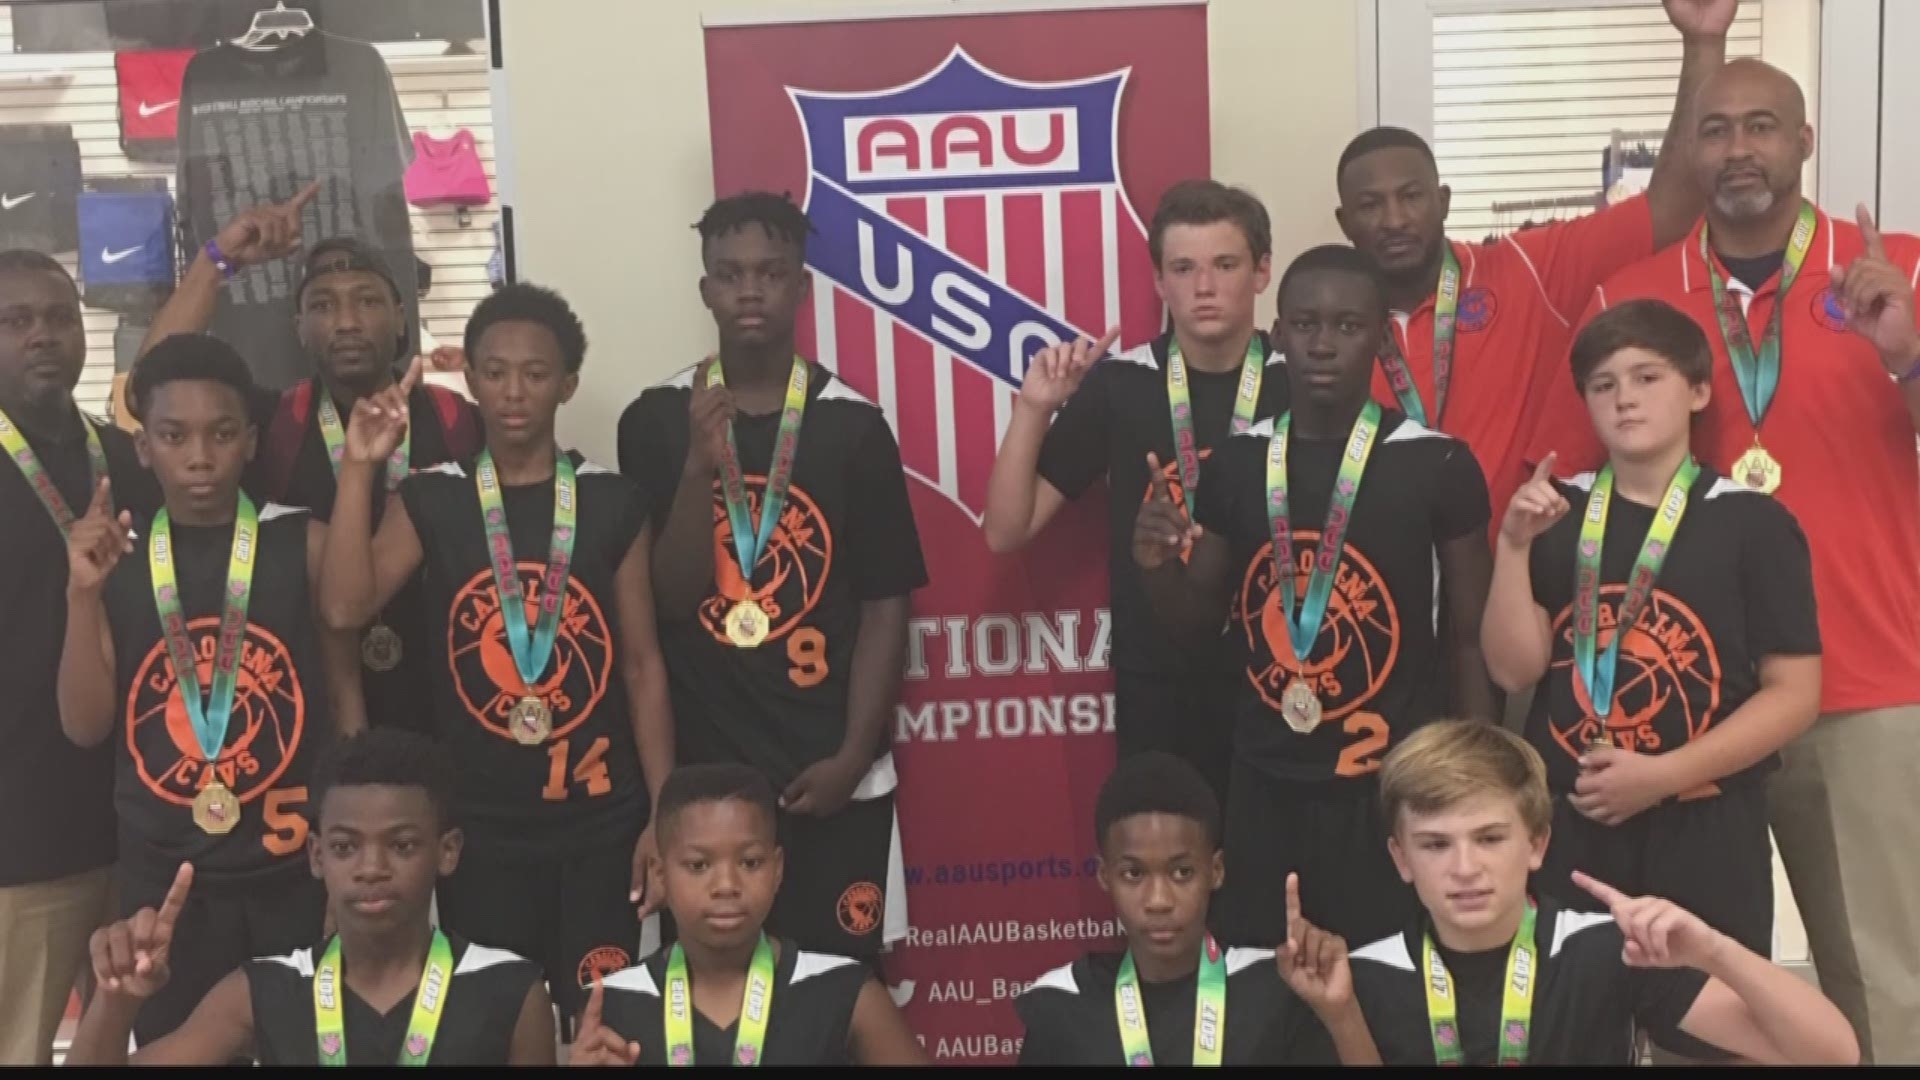 Local AAU Basketball Team Wins National Title